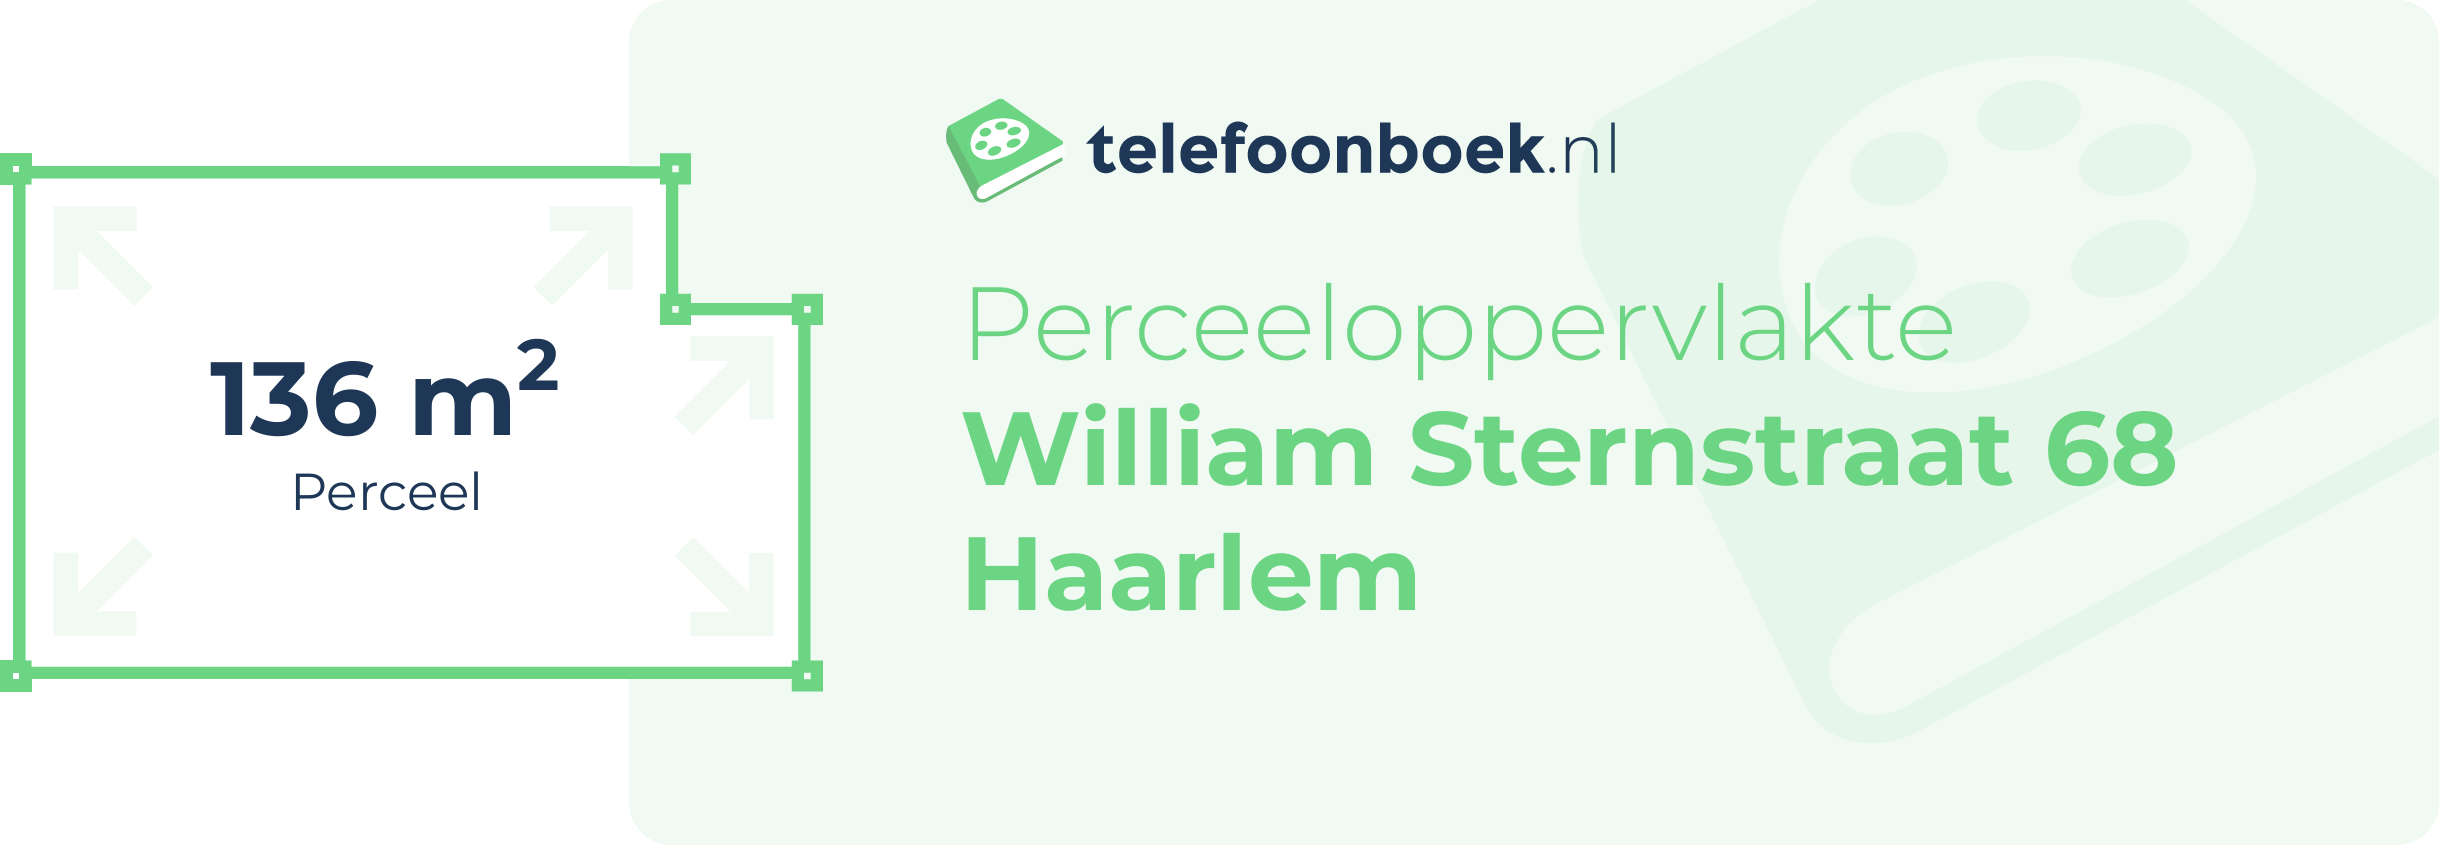 Perceeloppervlakte William Sternstraat 68 Haarlem